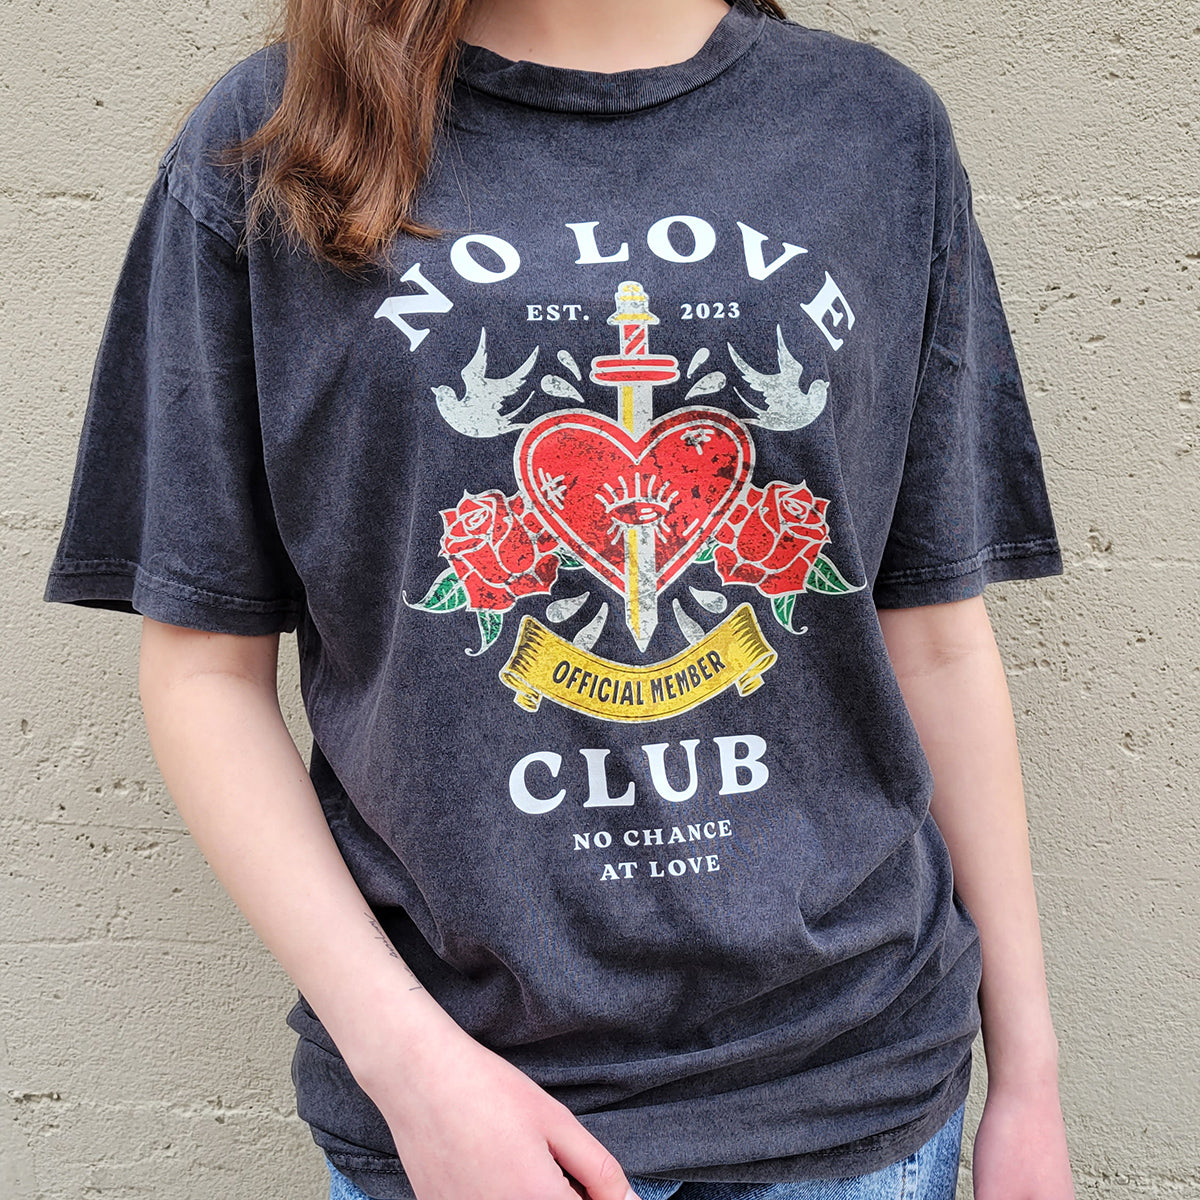 No Love Club T-Shirt